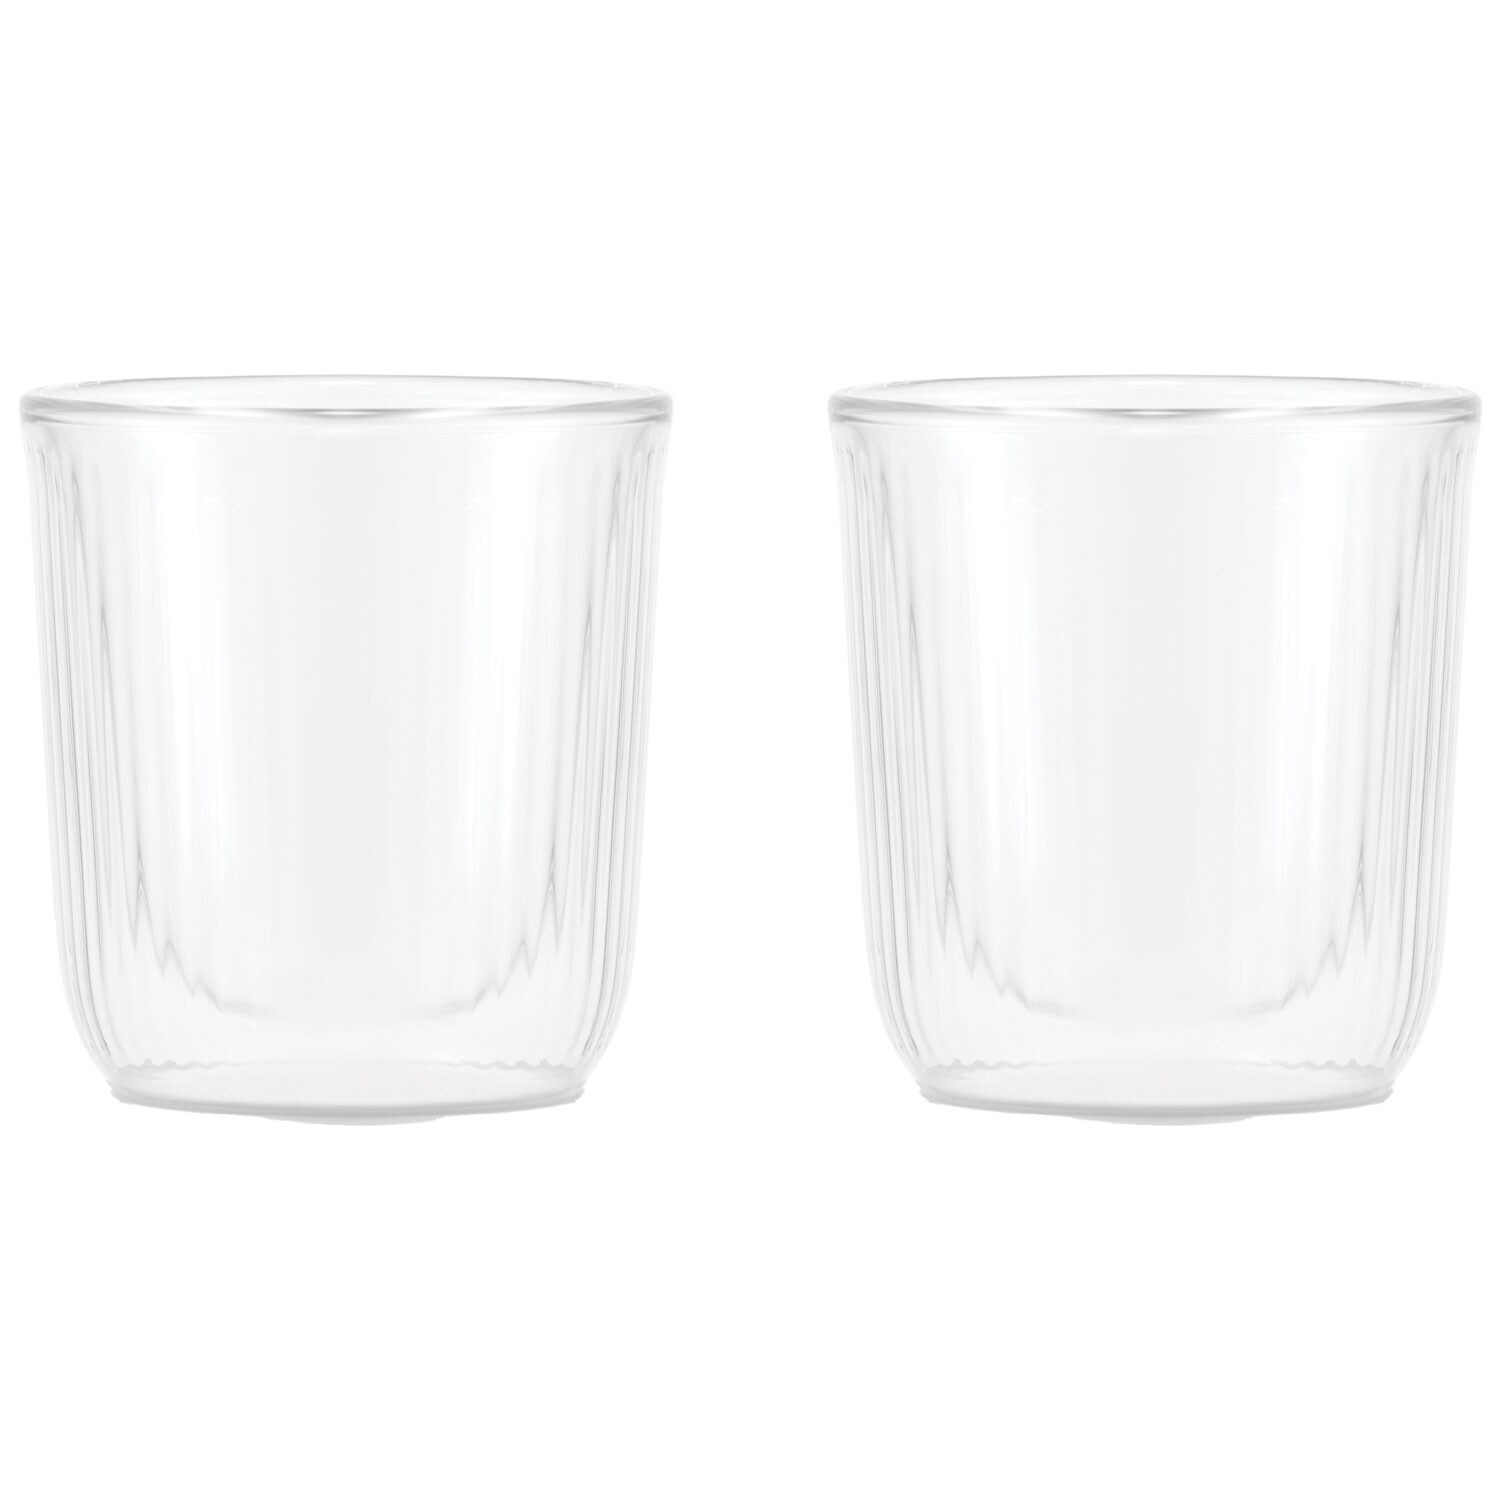 https://royaldesign.com/image/2/bodum-douro-double-walled-glass-2-pack-25-cl-0